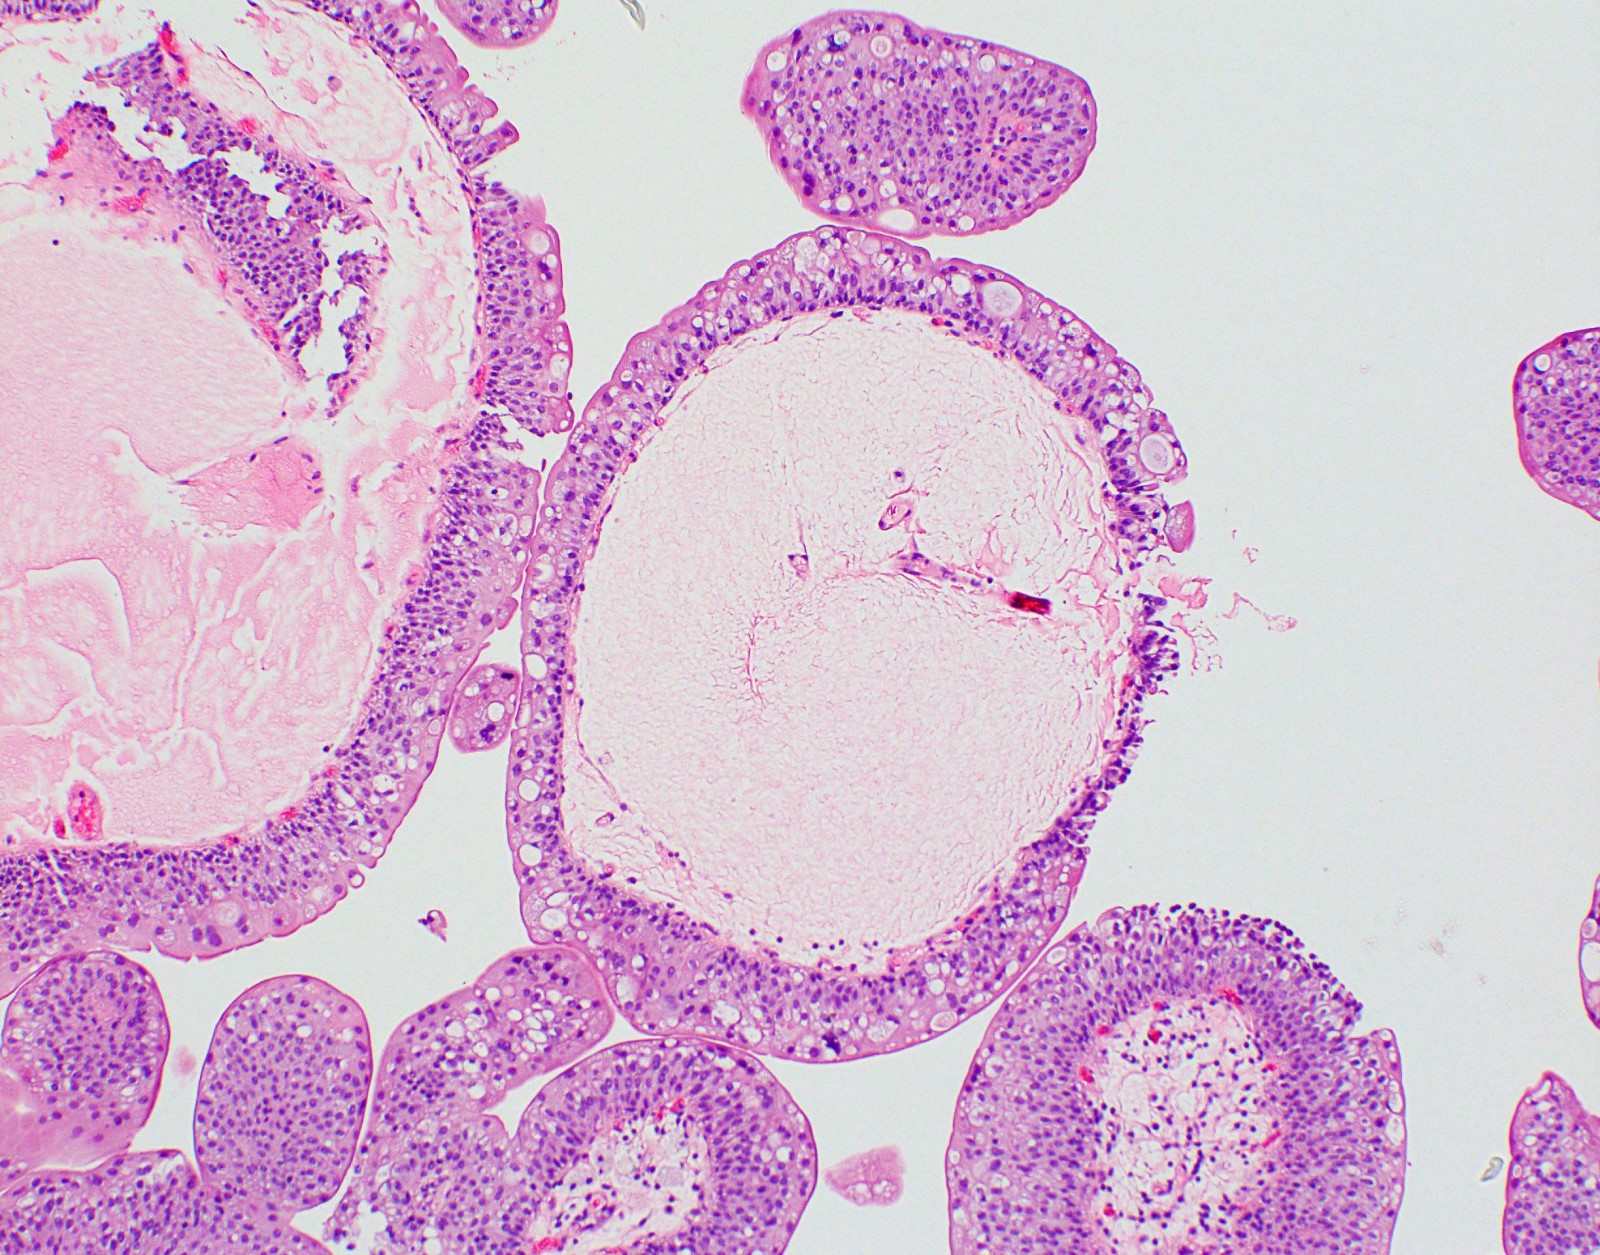 papilloma urinary bladder histopathology